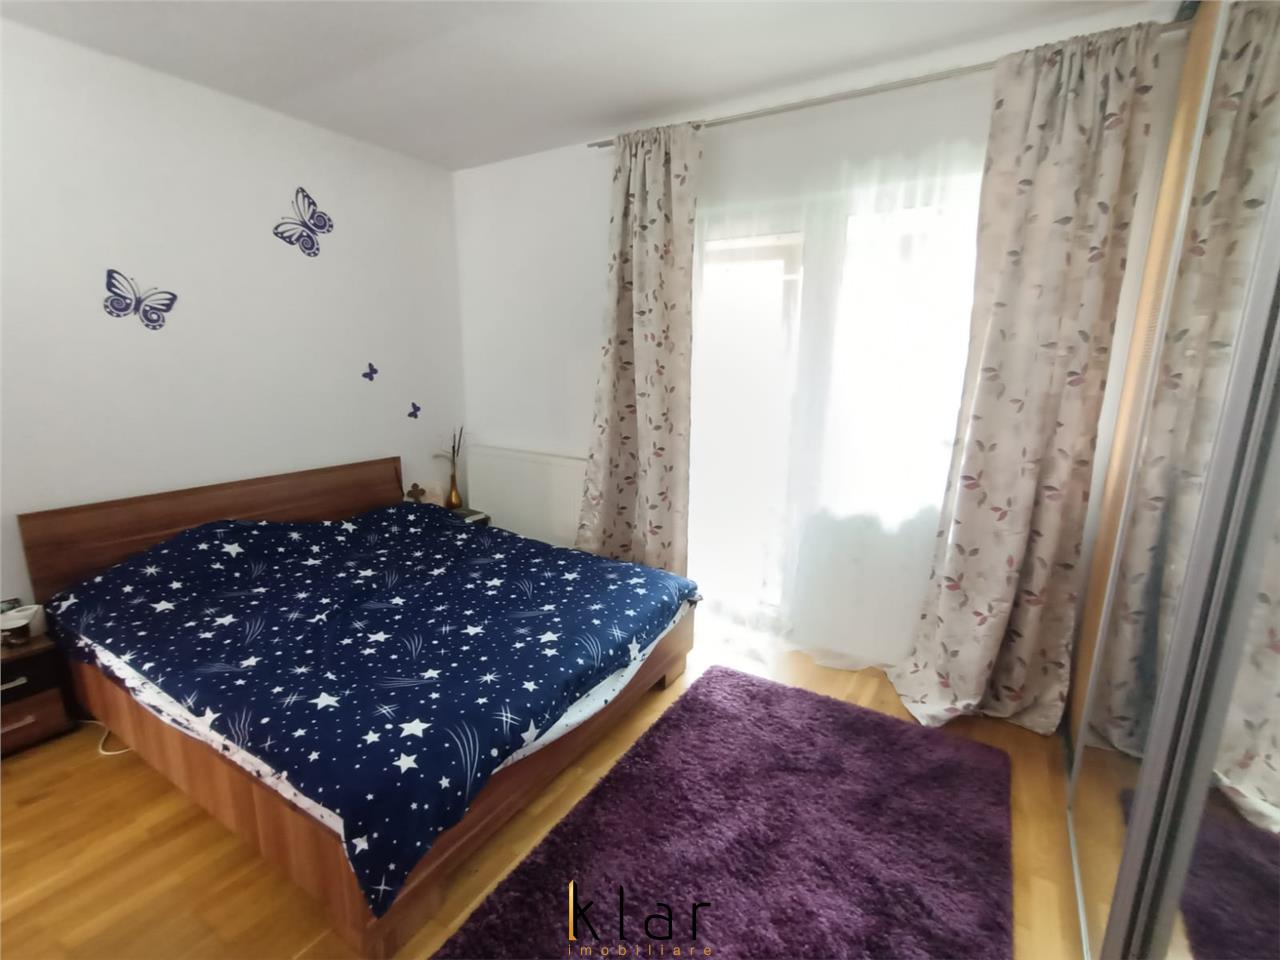 Apartament 3 camere, 69 mp, mobilat utilat, zona Eroilor -Avram Iancu!